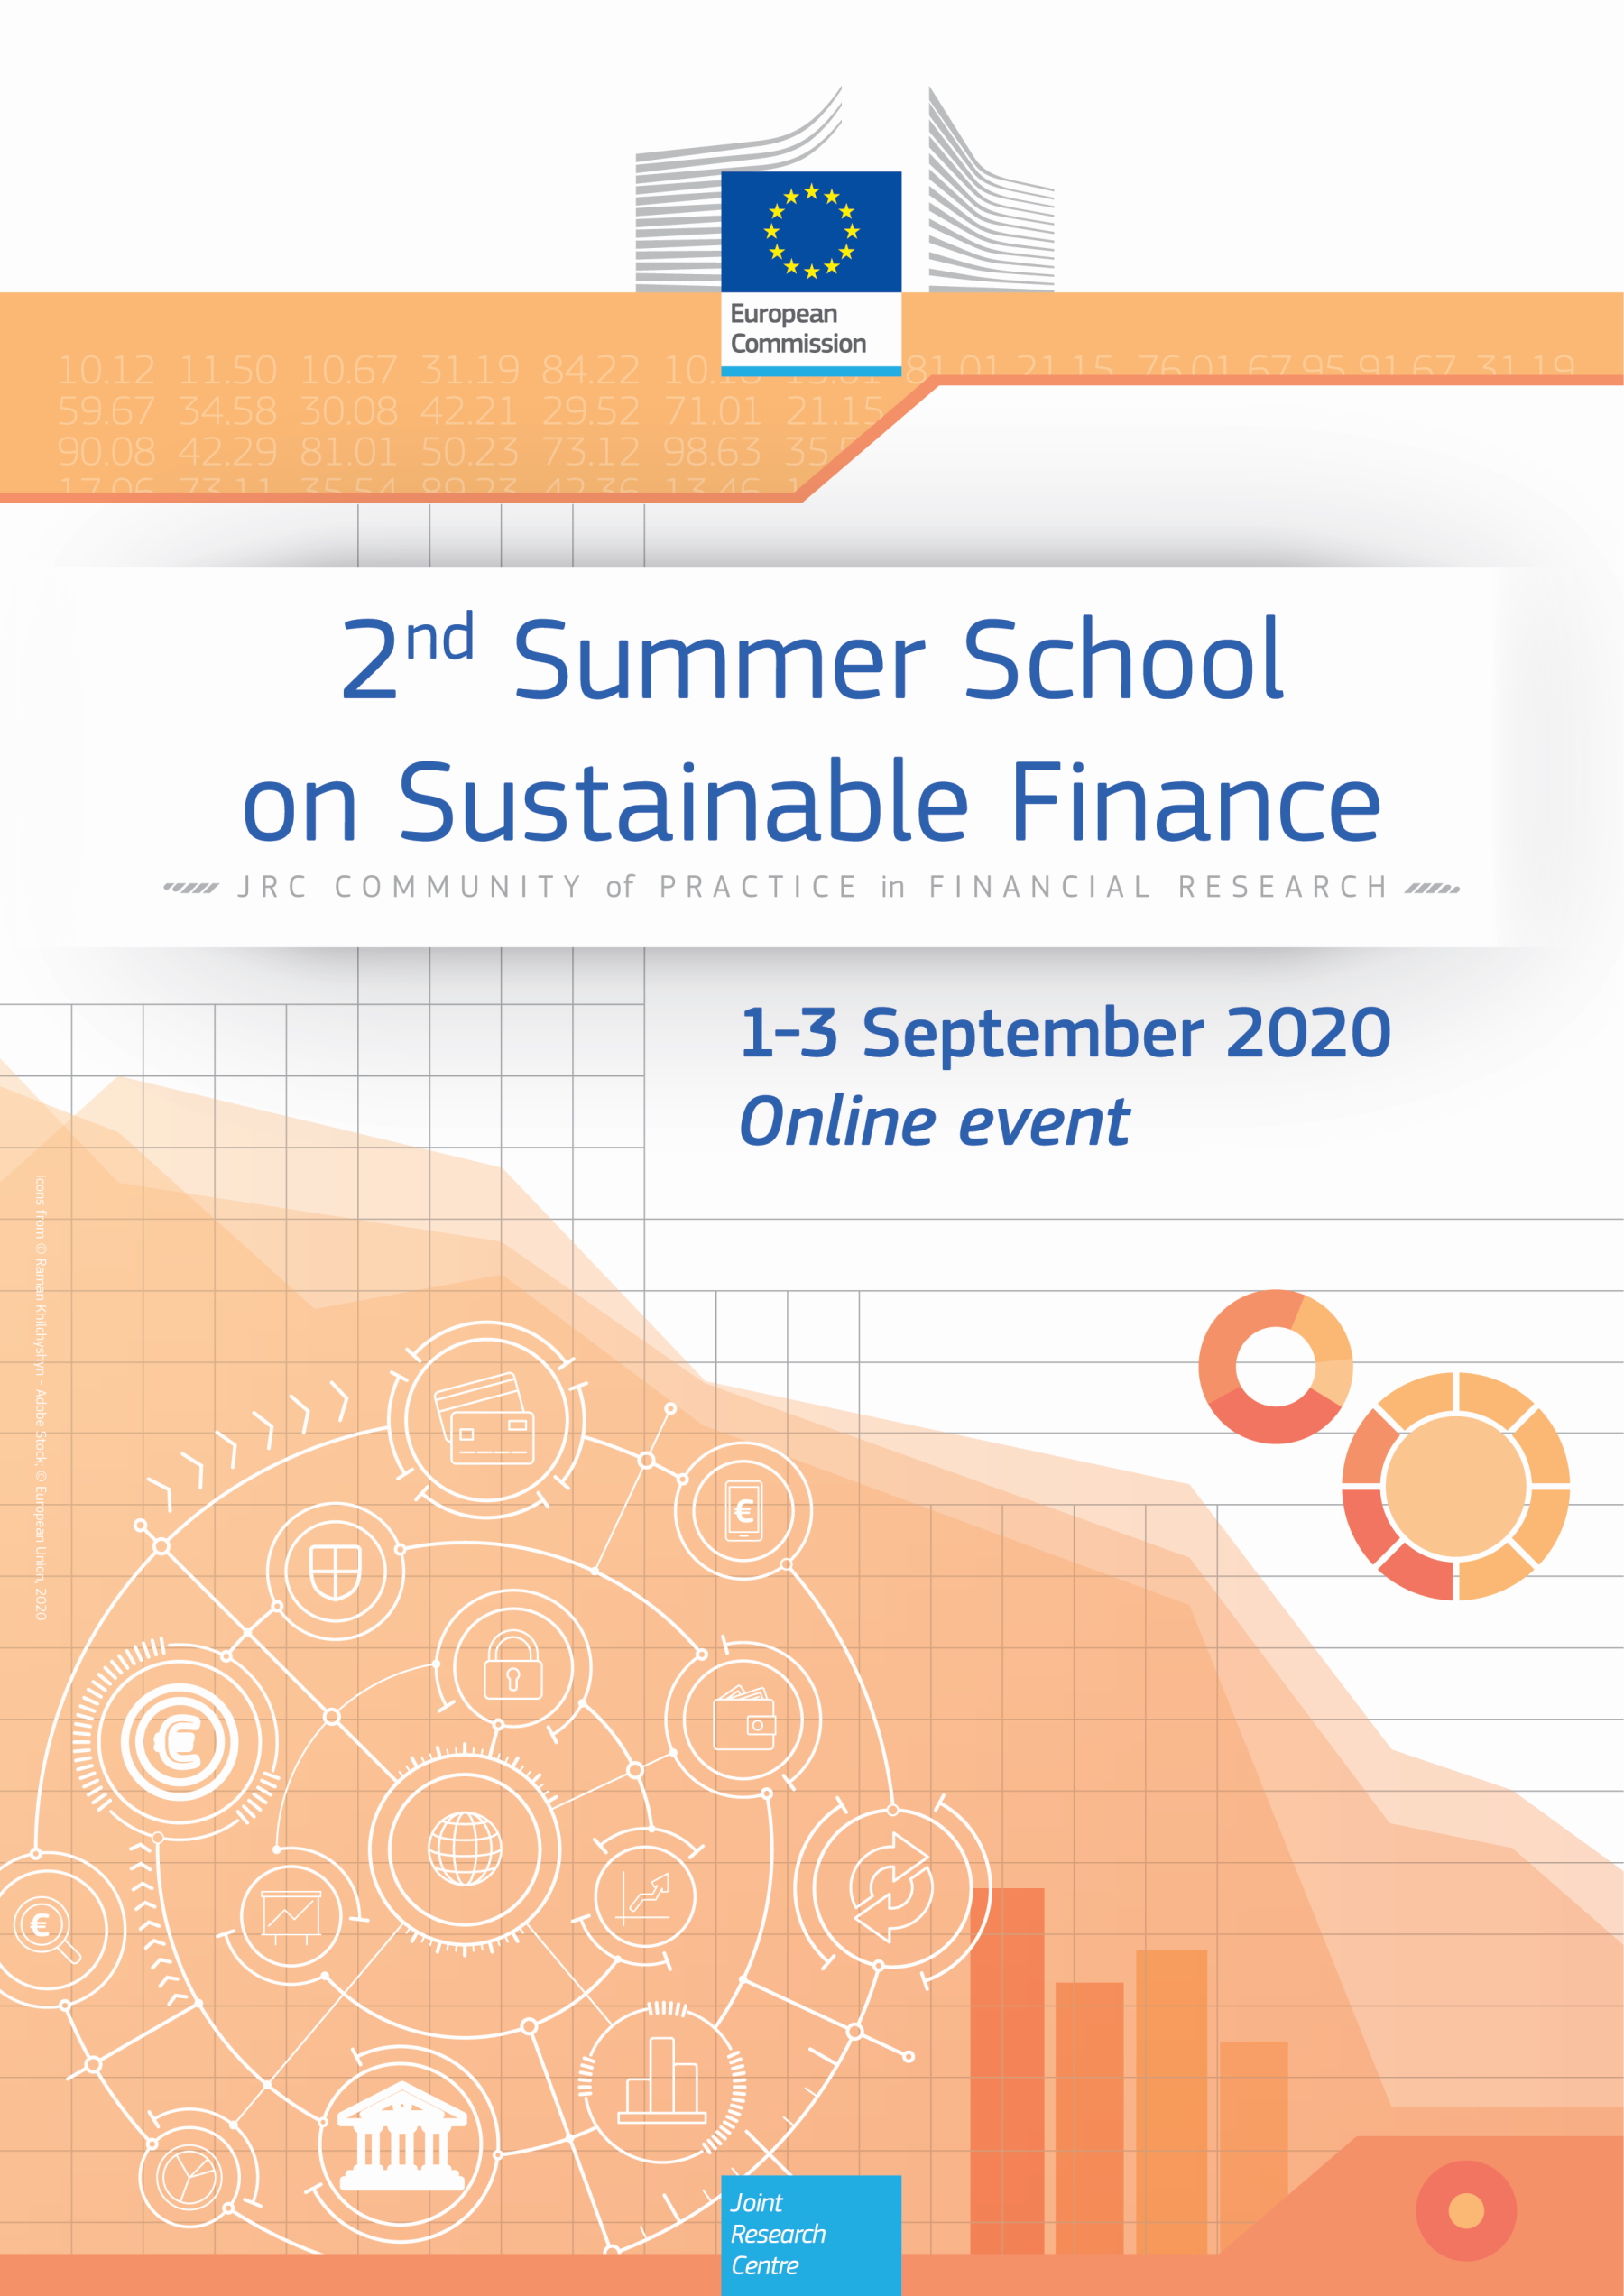 Digital summer school on sustainable finance - 1-3 September 2020